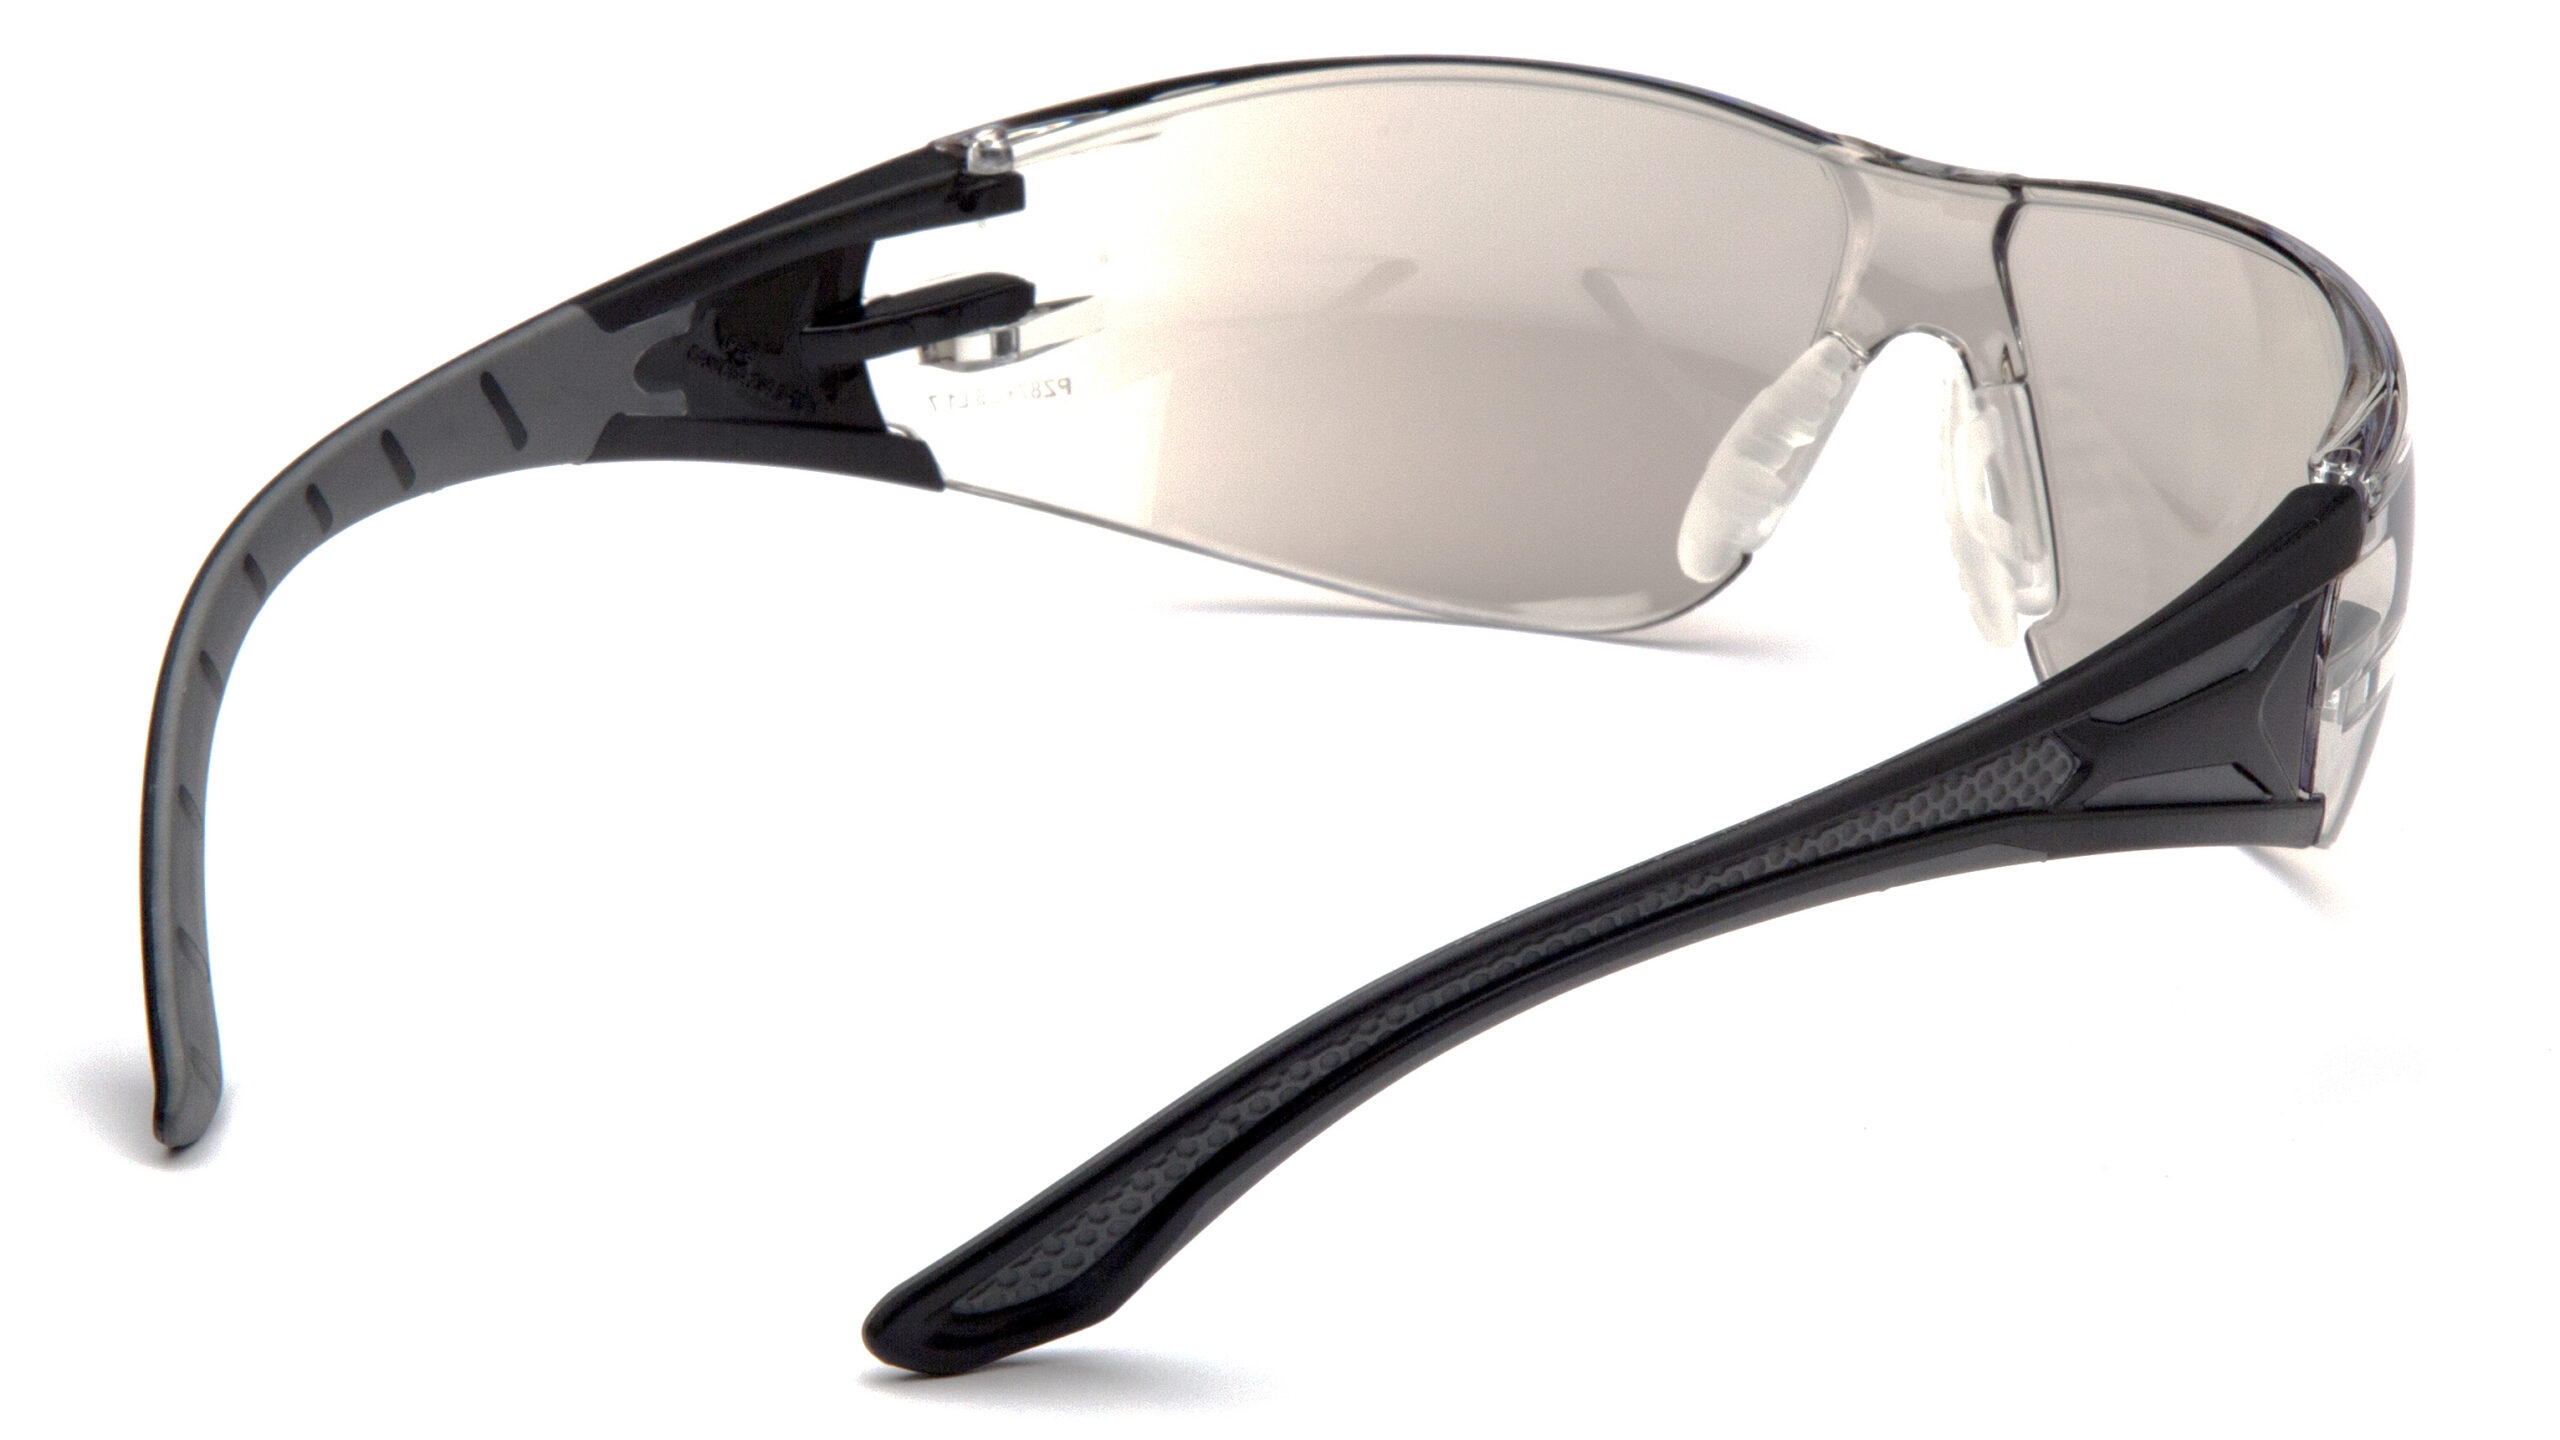 Pyramex Endeavor Plus Gray/Black Indoor/Outdoor Mirror Safety Glasses Sun Z87+ 